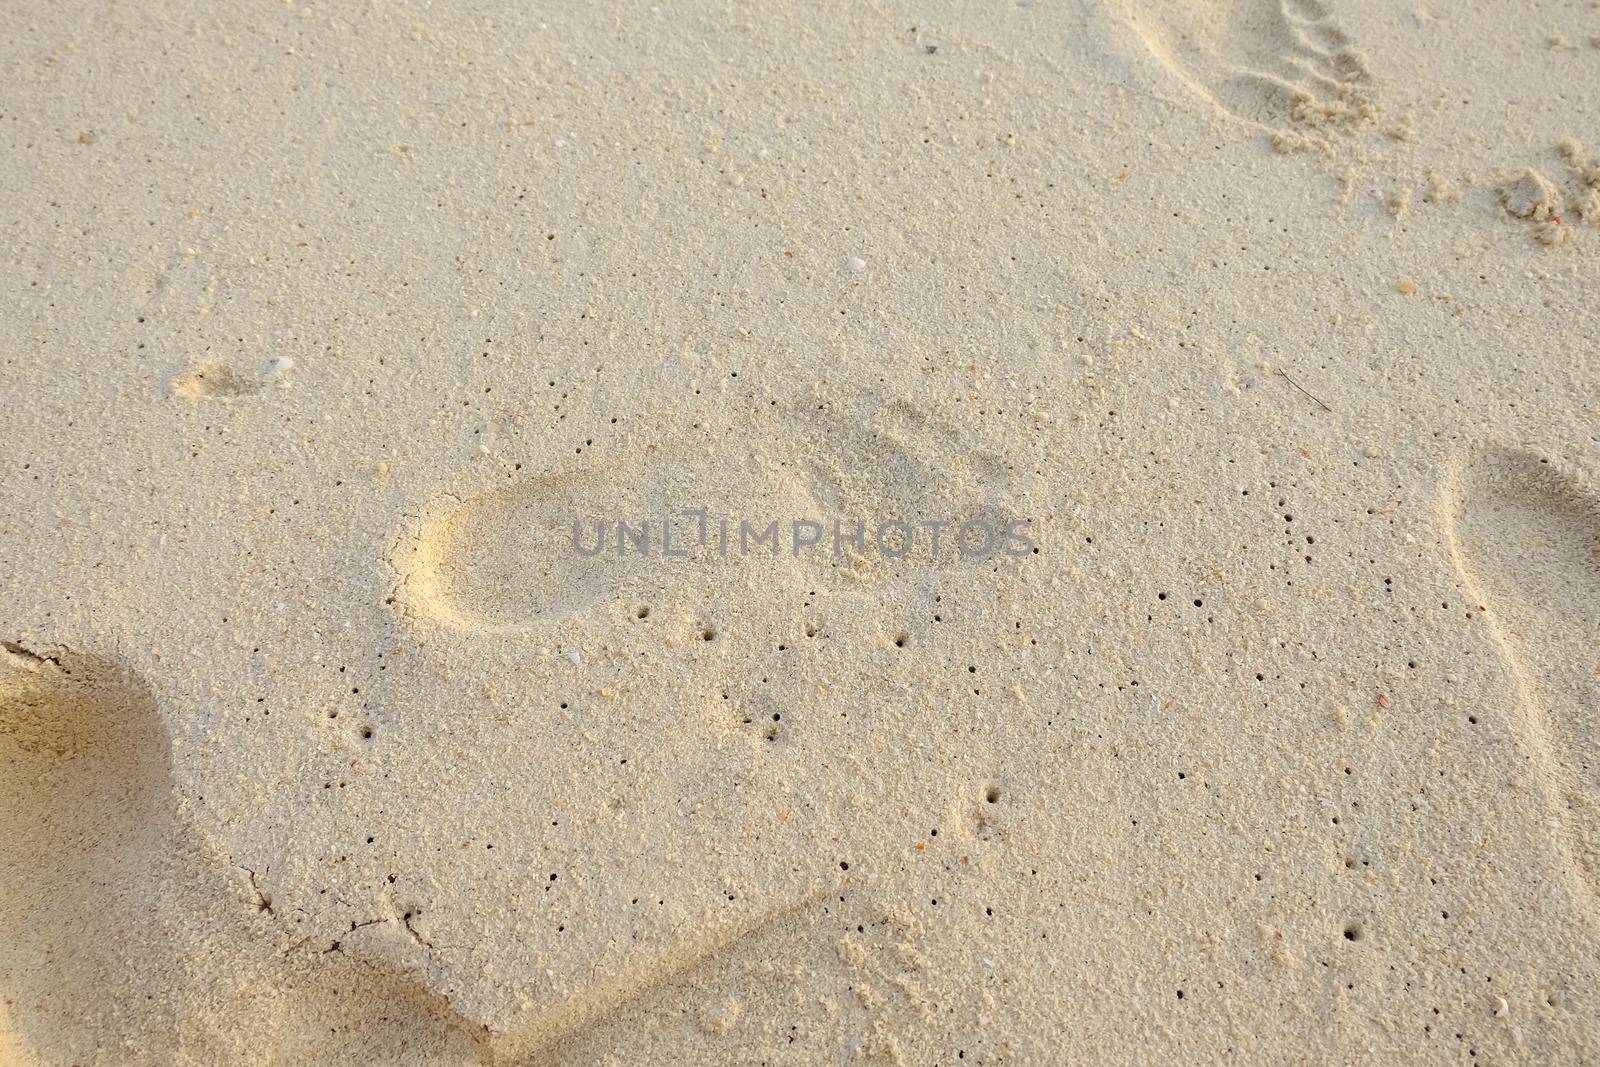 footprint on the beach at the sea by Wmpix